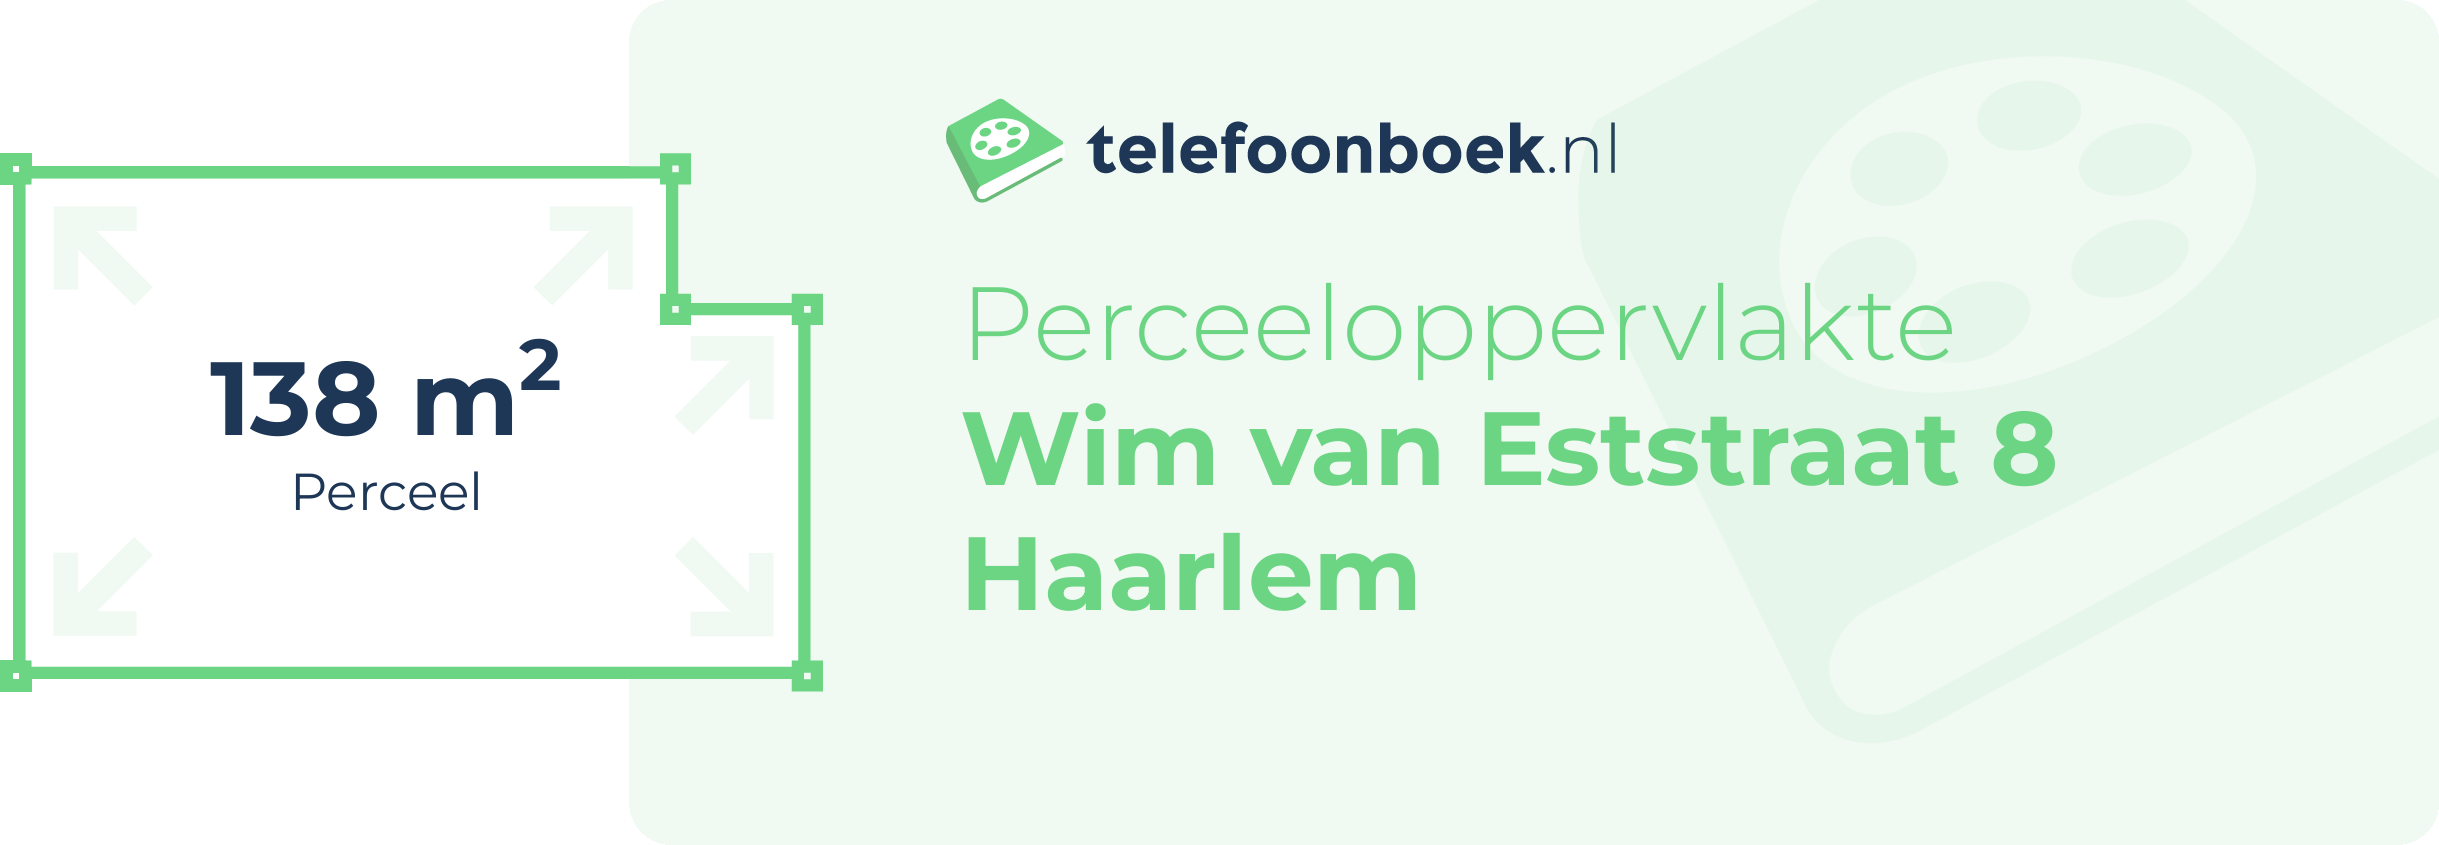 Perceeloppervlakte Wim Van Eststraat 8 Haarlem